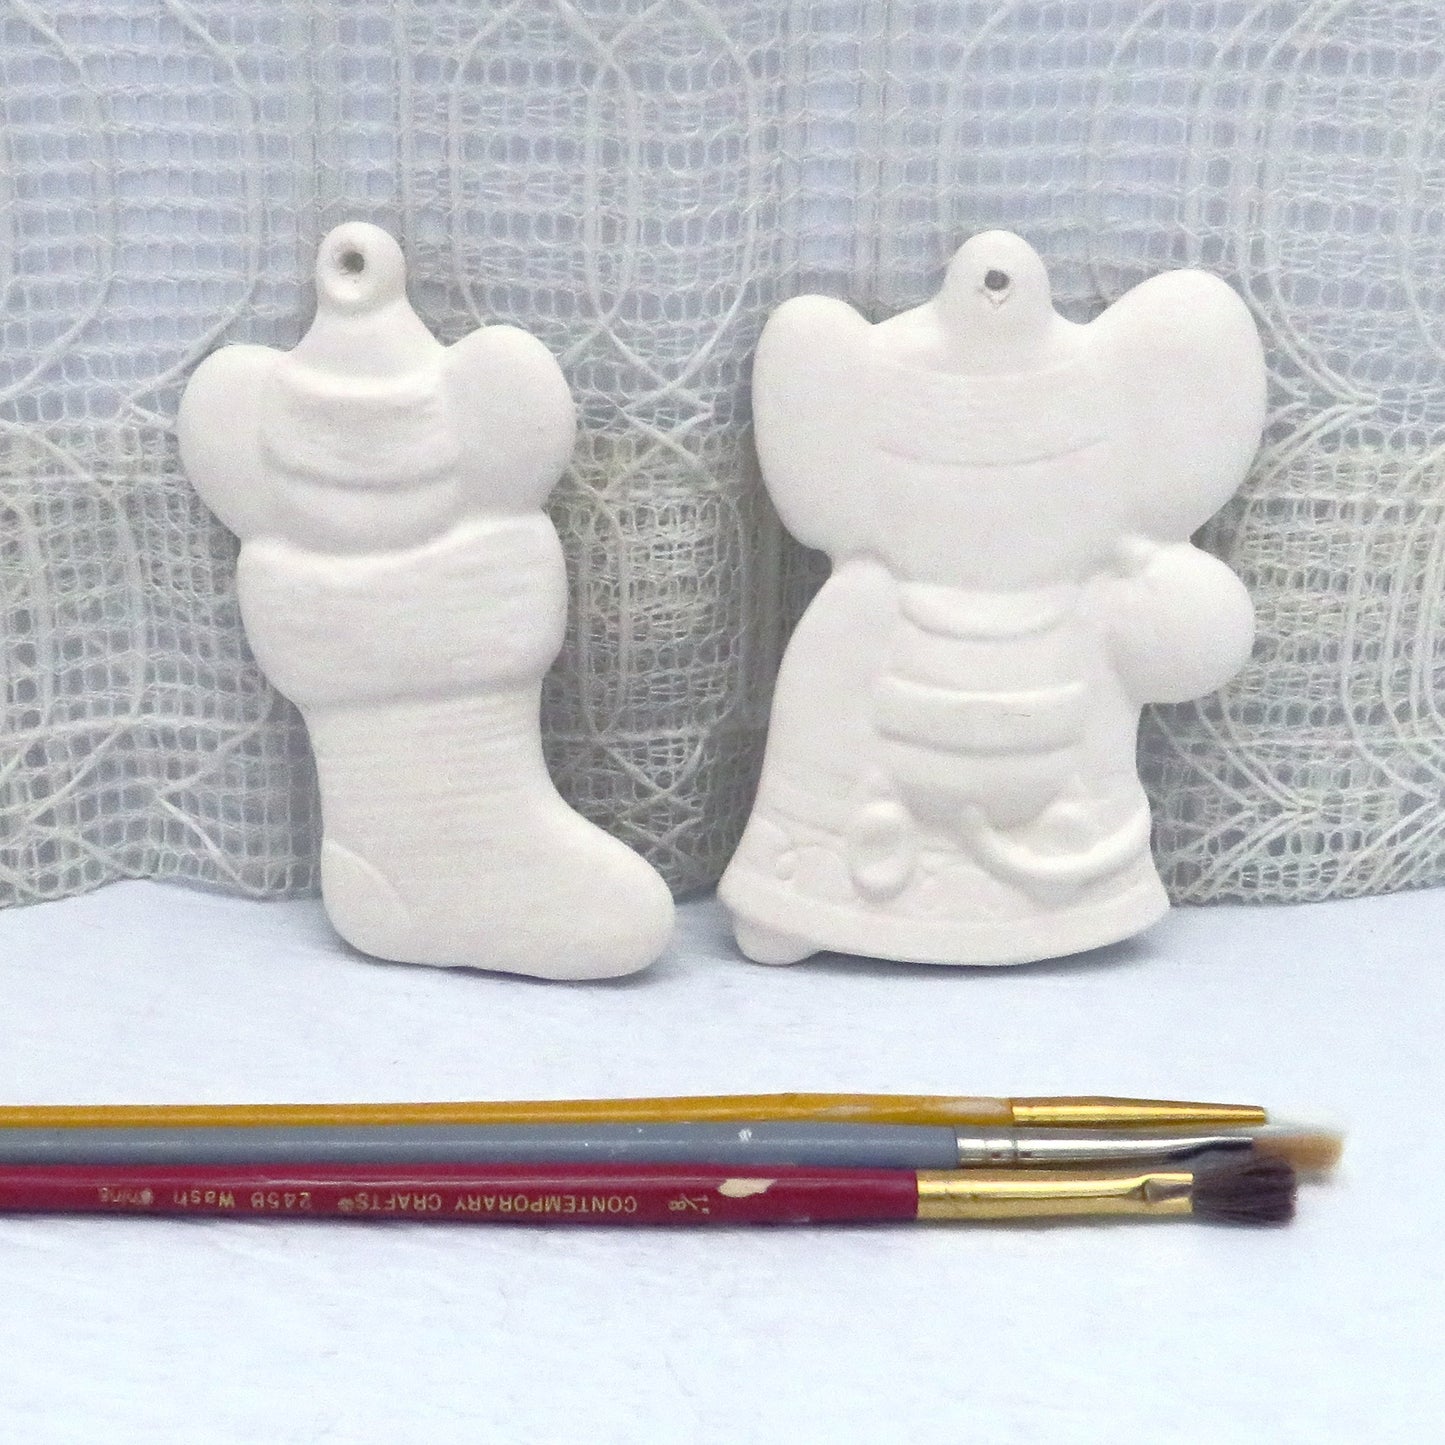 Handmade Paintable Ceramic Mouse Christmas Ornaments, Ready to Paint Ceramic Christmas Decor